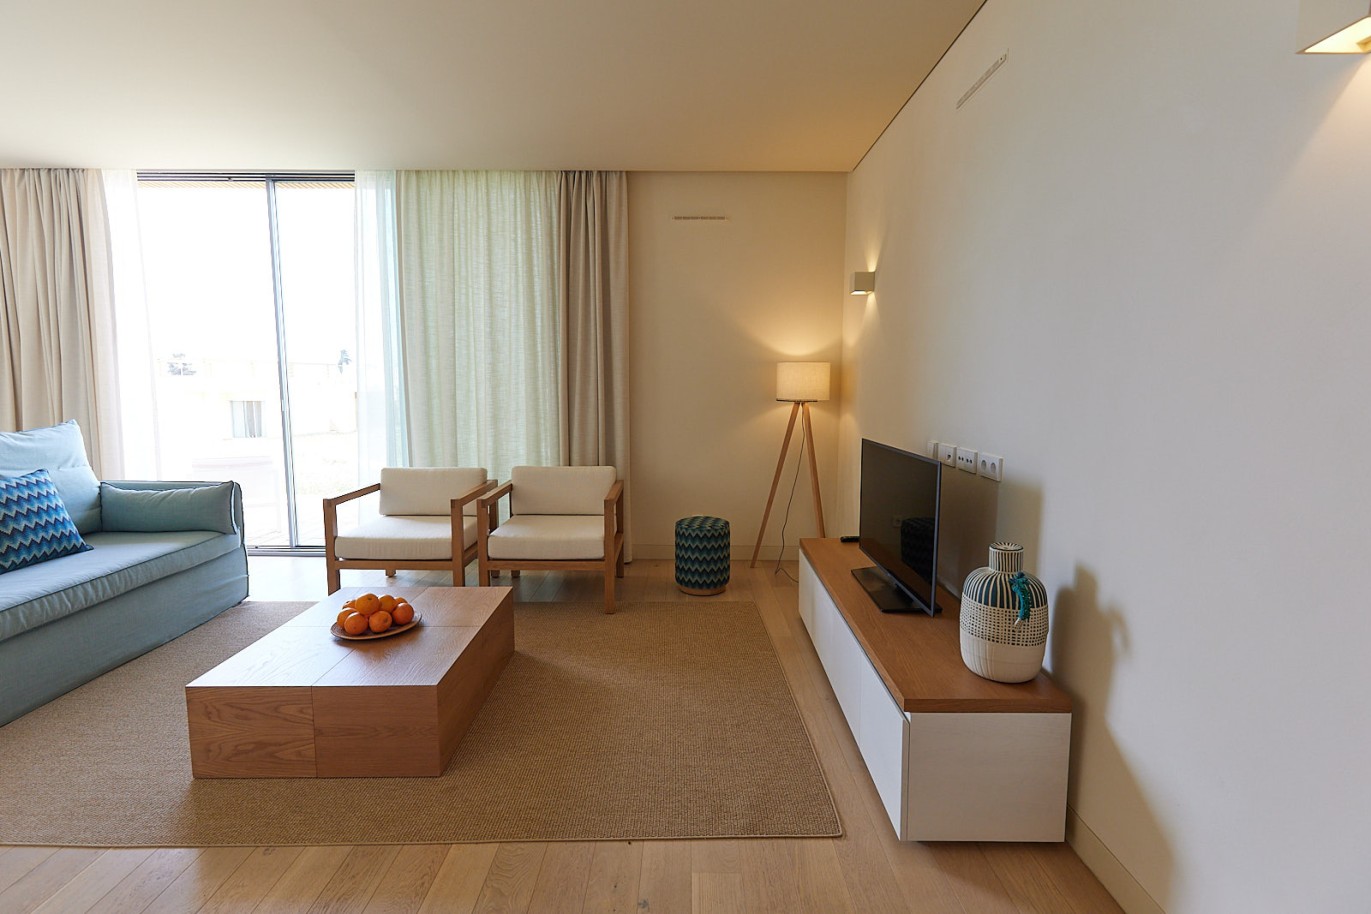 2 bedroom apartment in resort, for sale in Porches, Algarve_229158